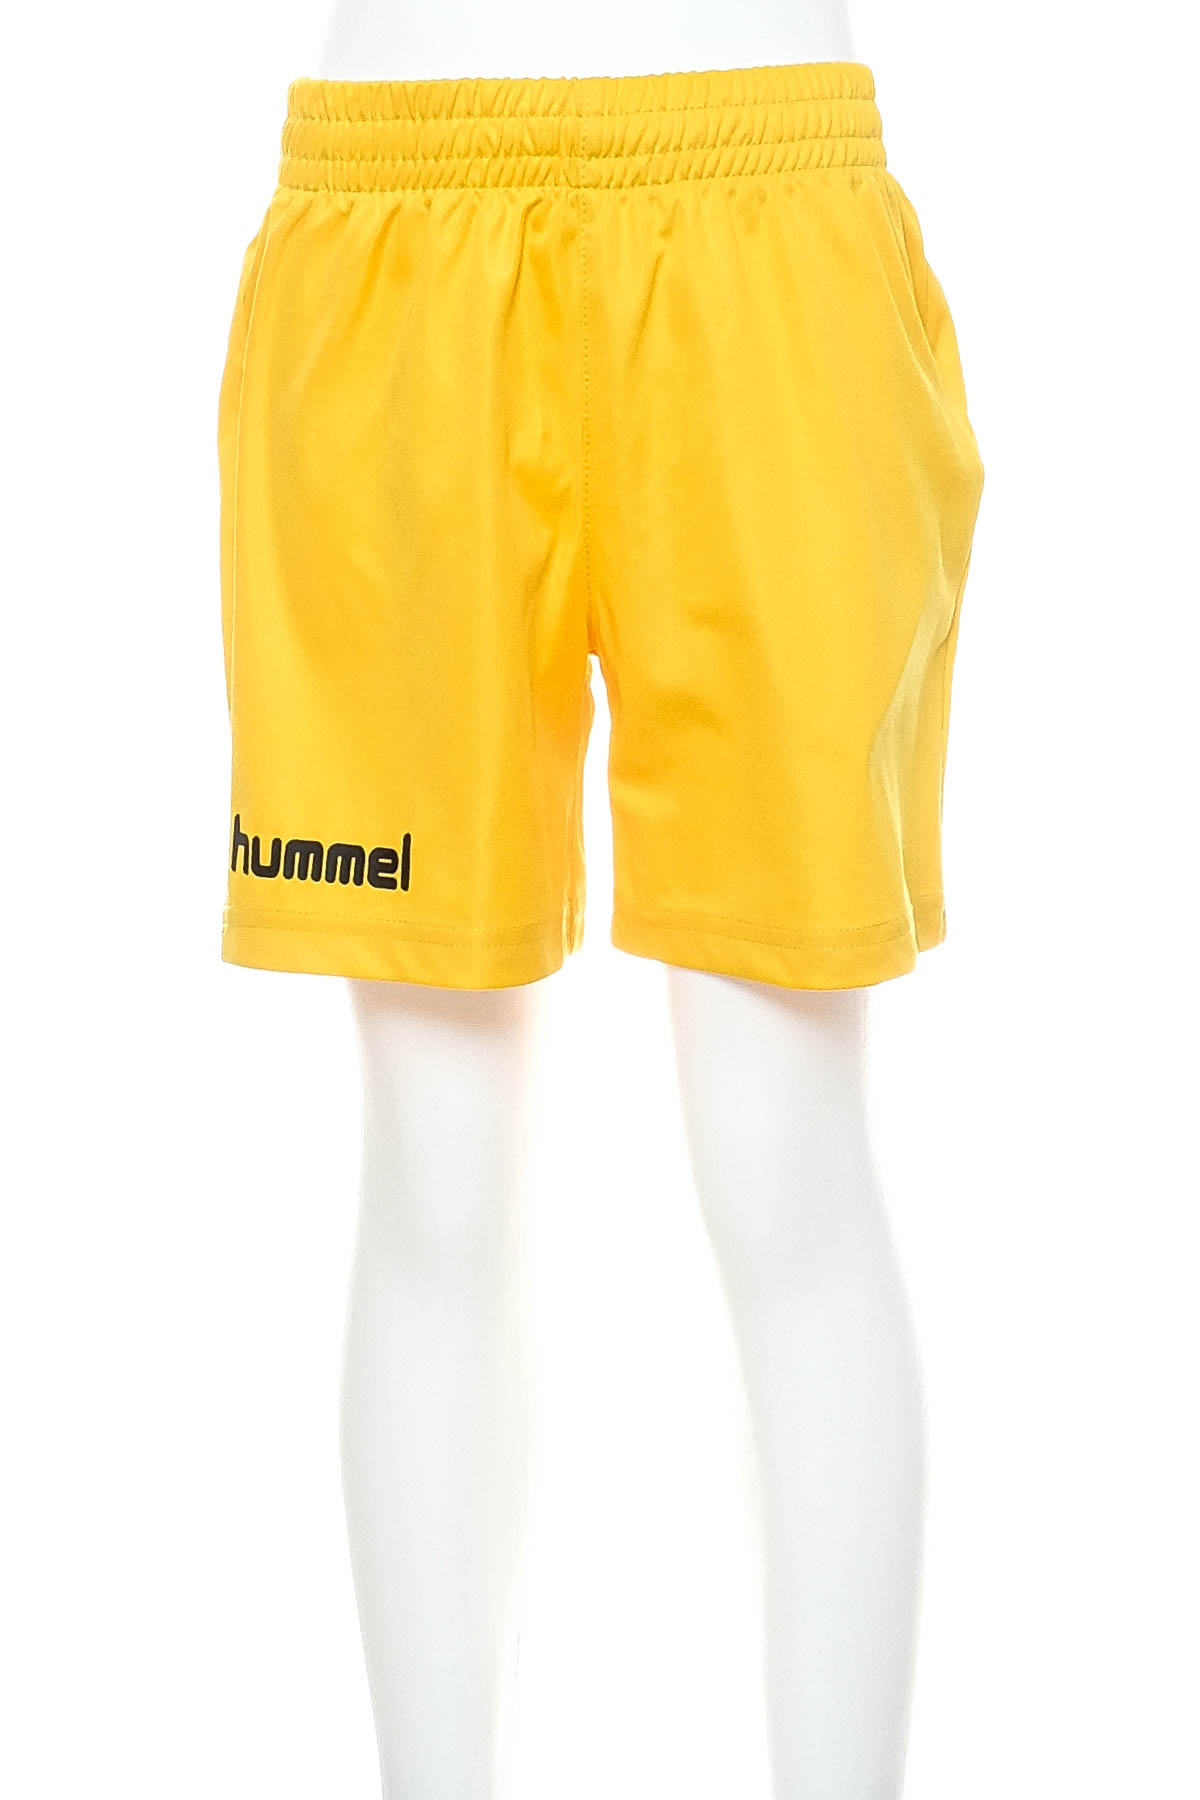 Shorts for boys - Hummel - 0